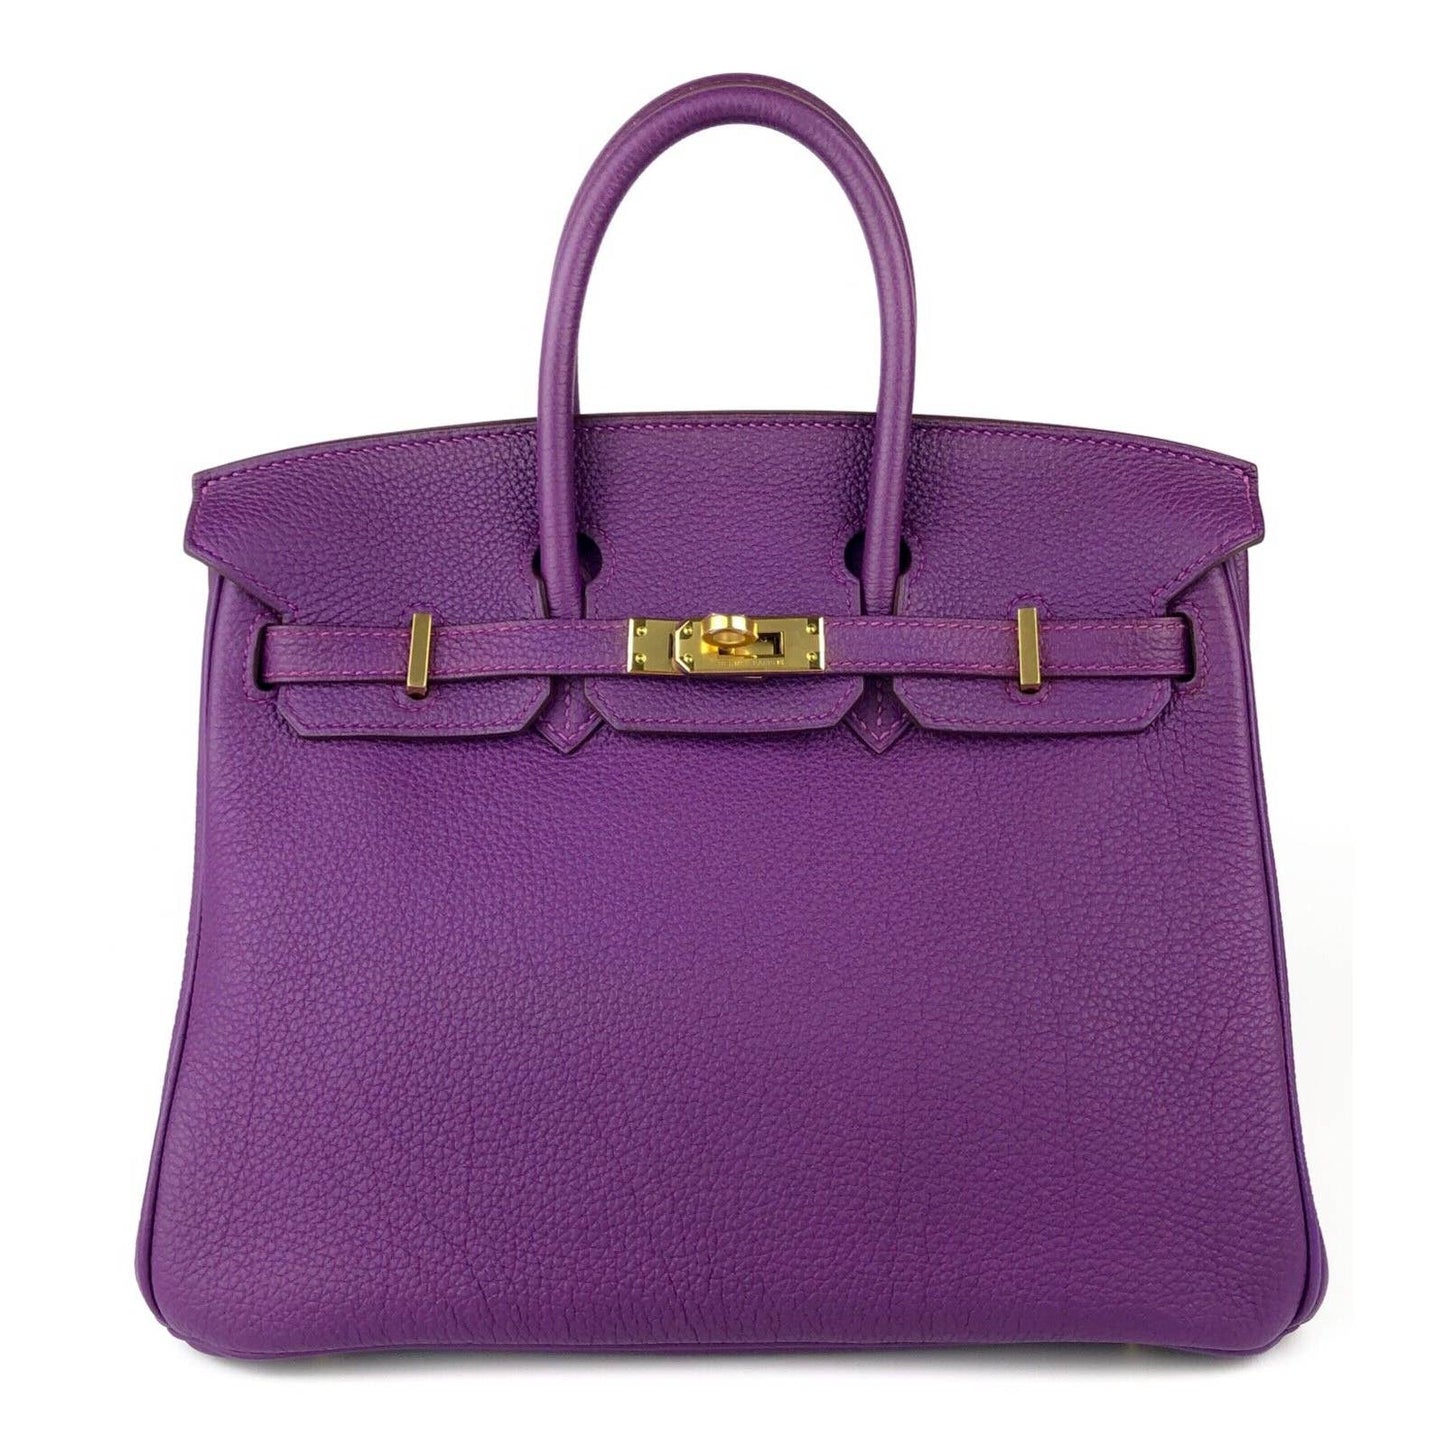 Hermes Birkin 25 Anemone Purple Togo Leather Gold Hardware Handbag Bag